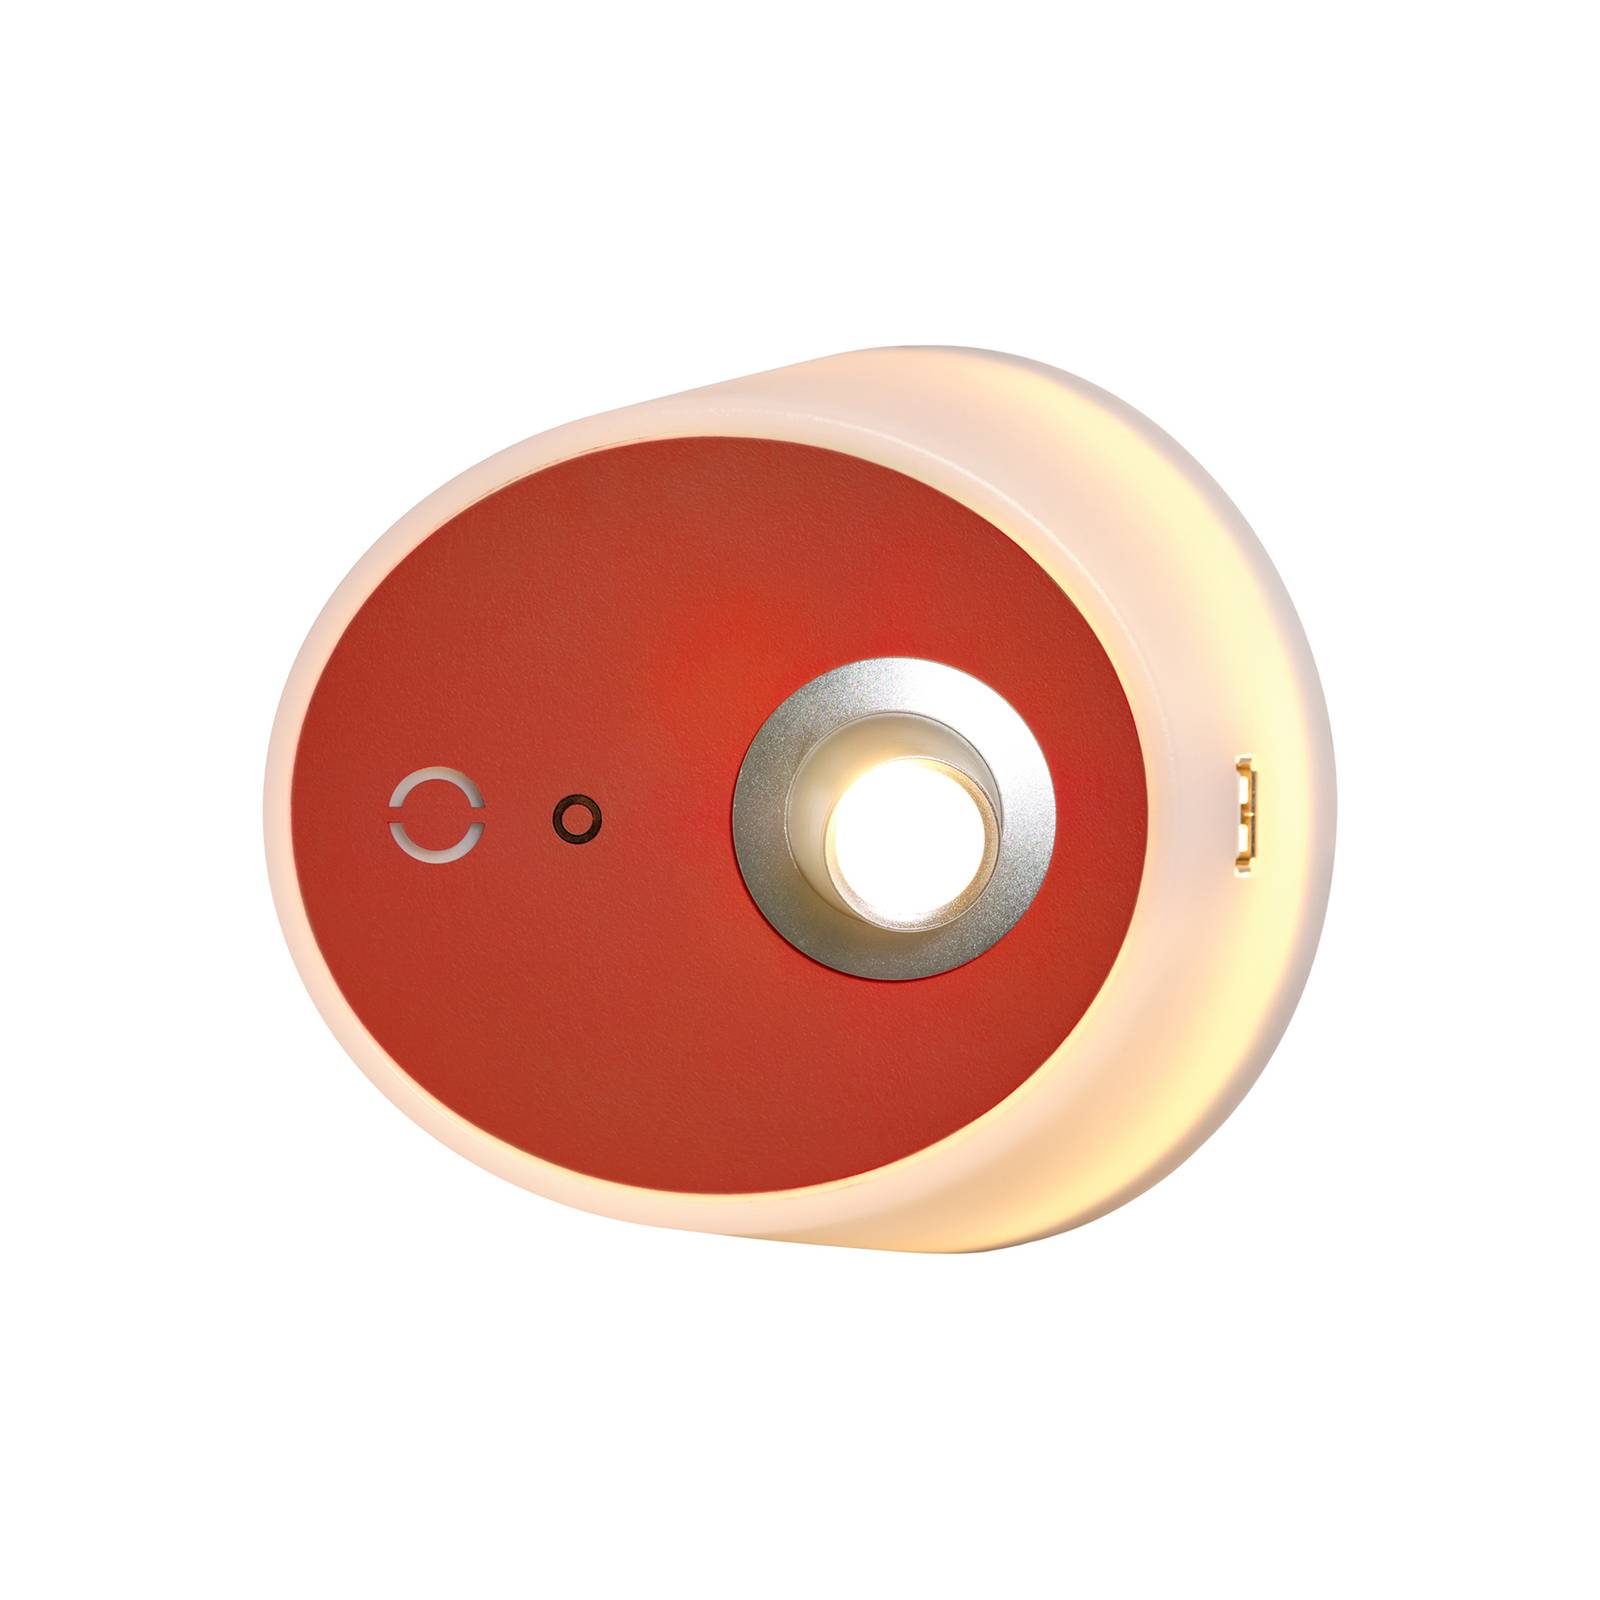 Carpyen LED-Wandlampe Zoom, Spot, USB-Ausgang, terracotta